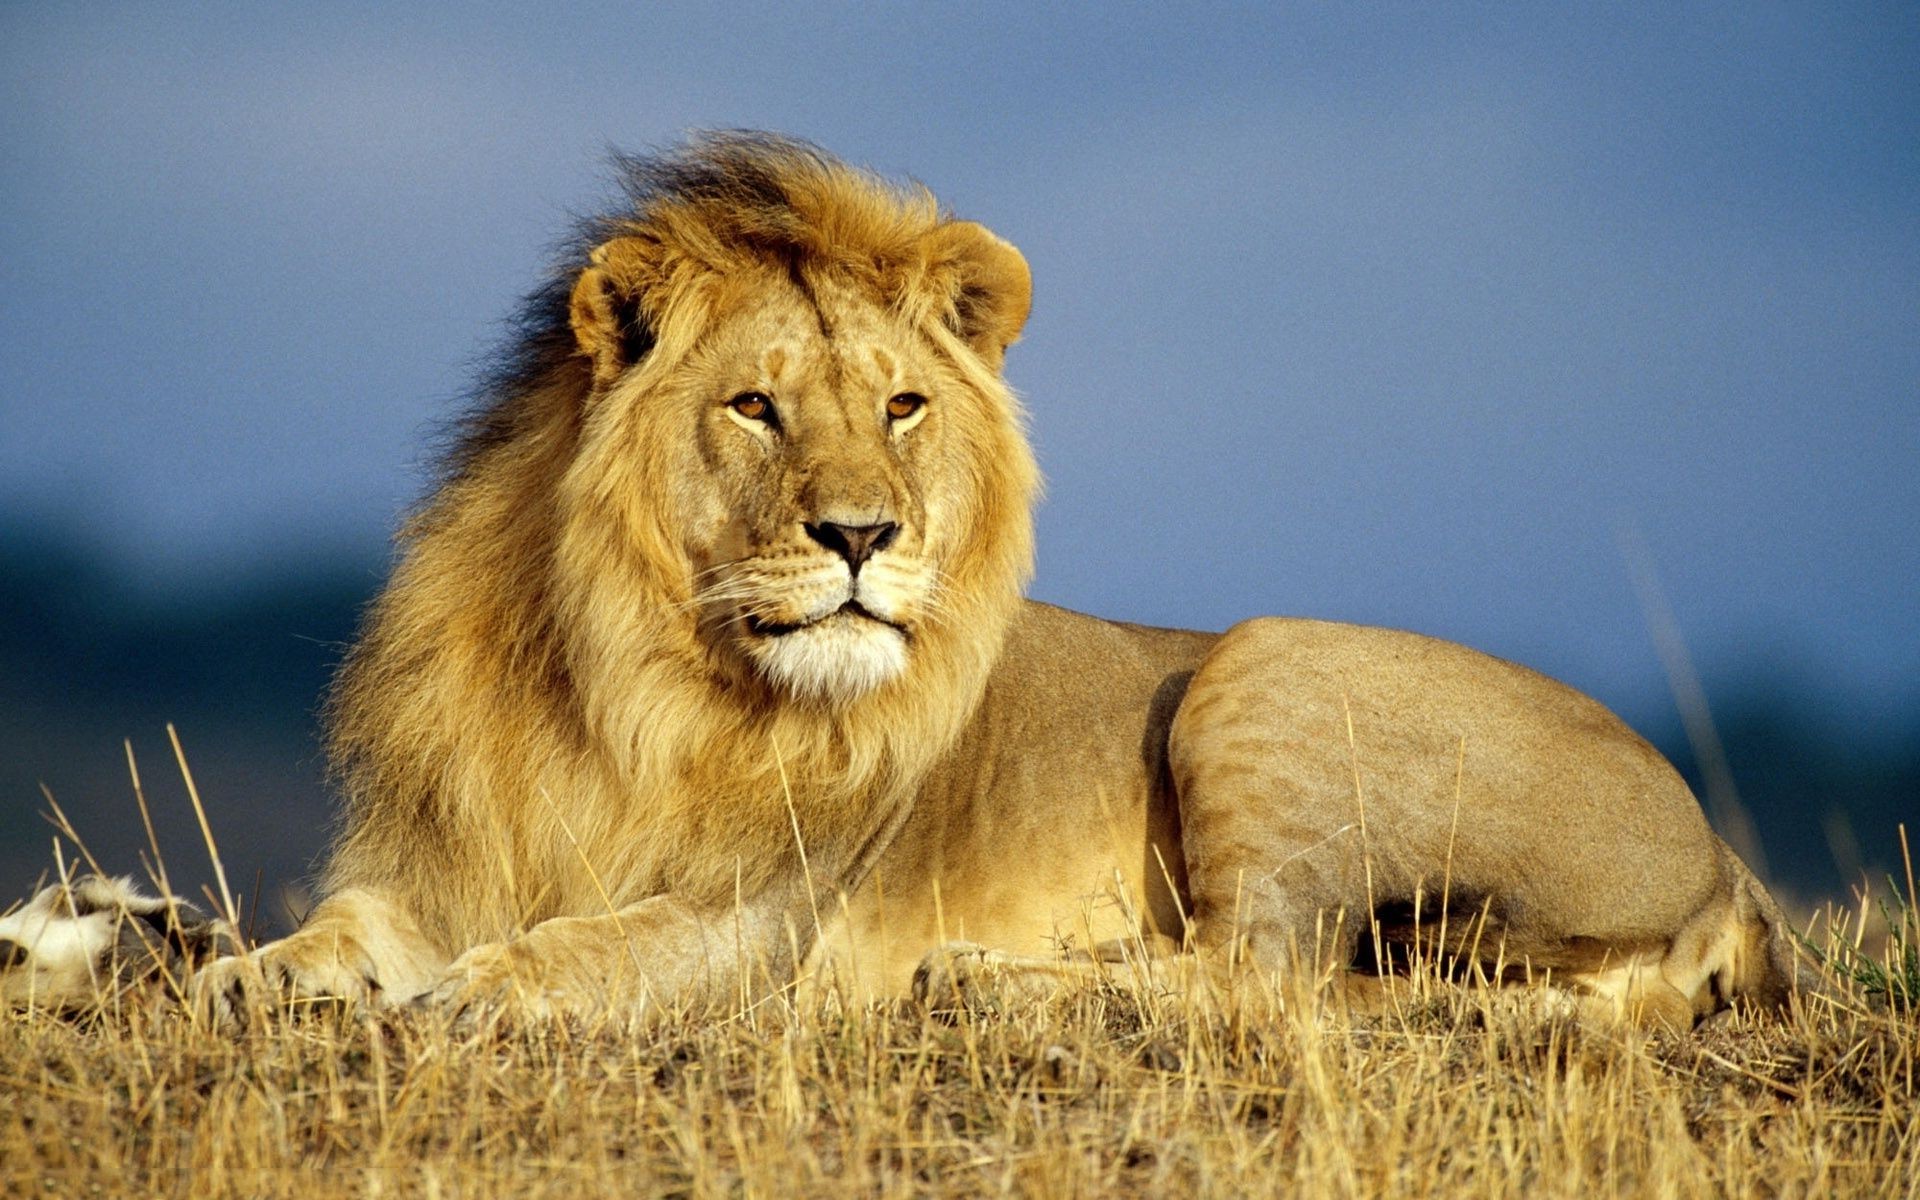 lions cat lion mammal wildlife predator safari animal portrait wild lioness nature big cat carnivore